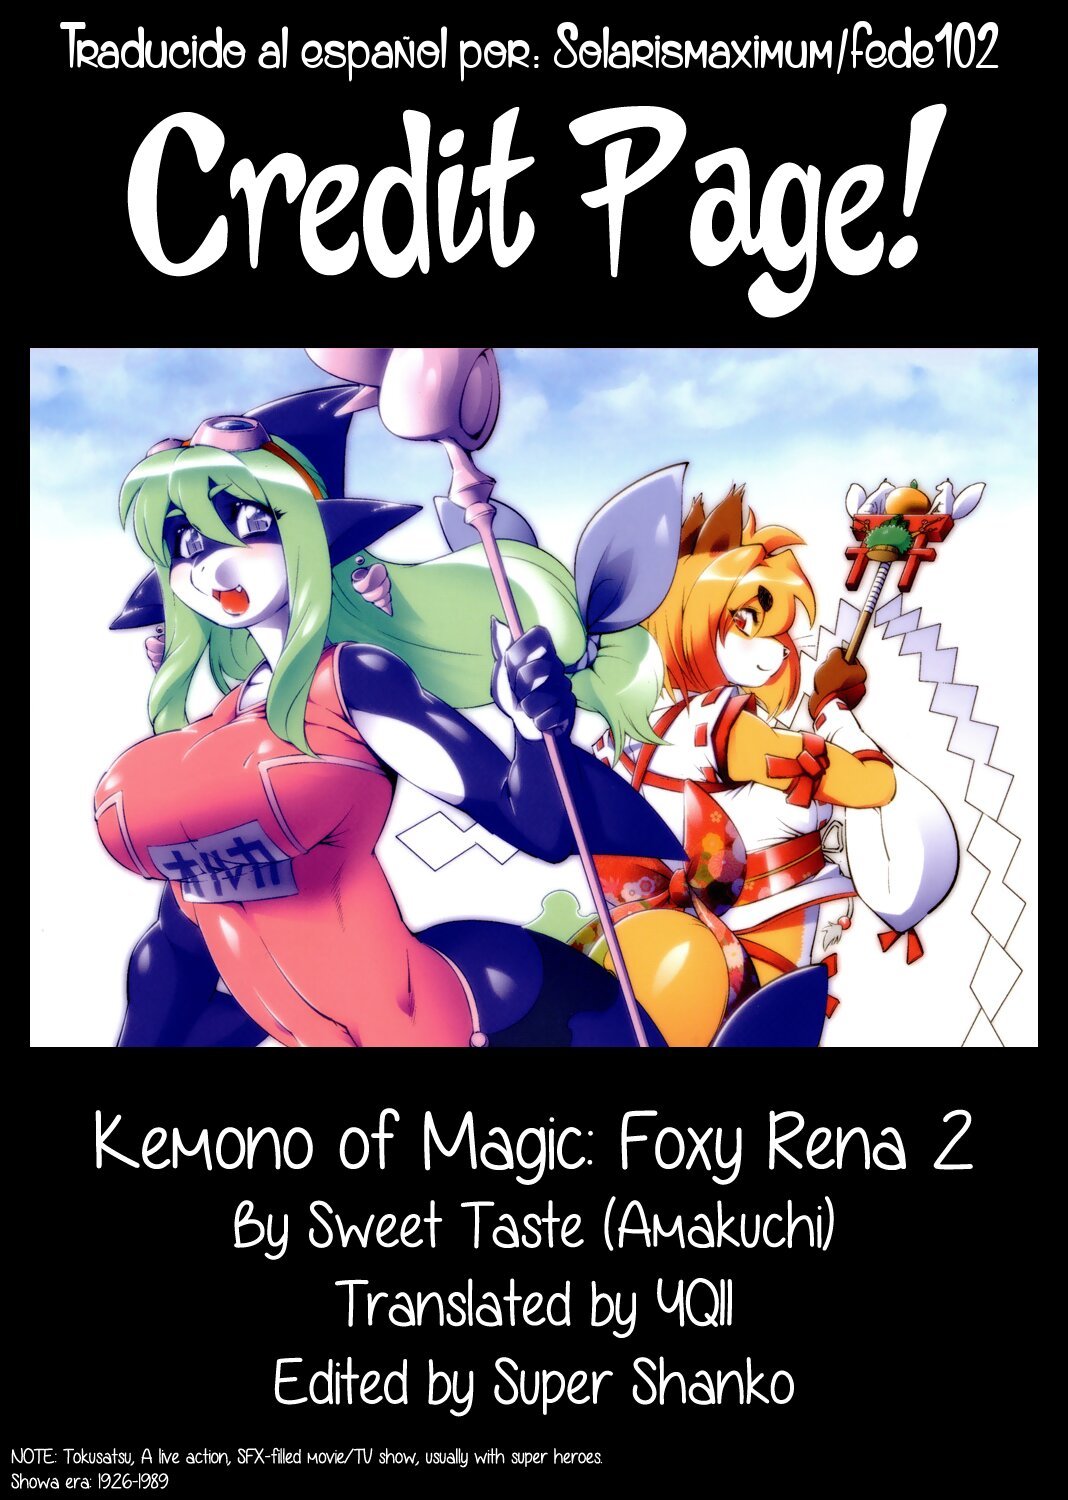 Kemono of Magic Foxy Rena 2 - 28